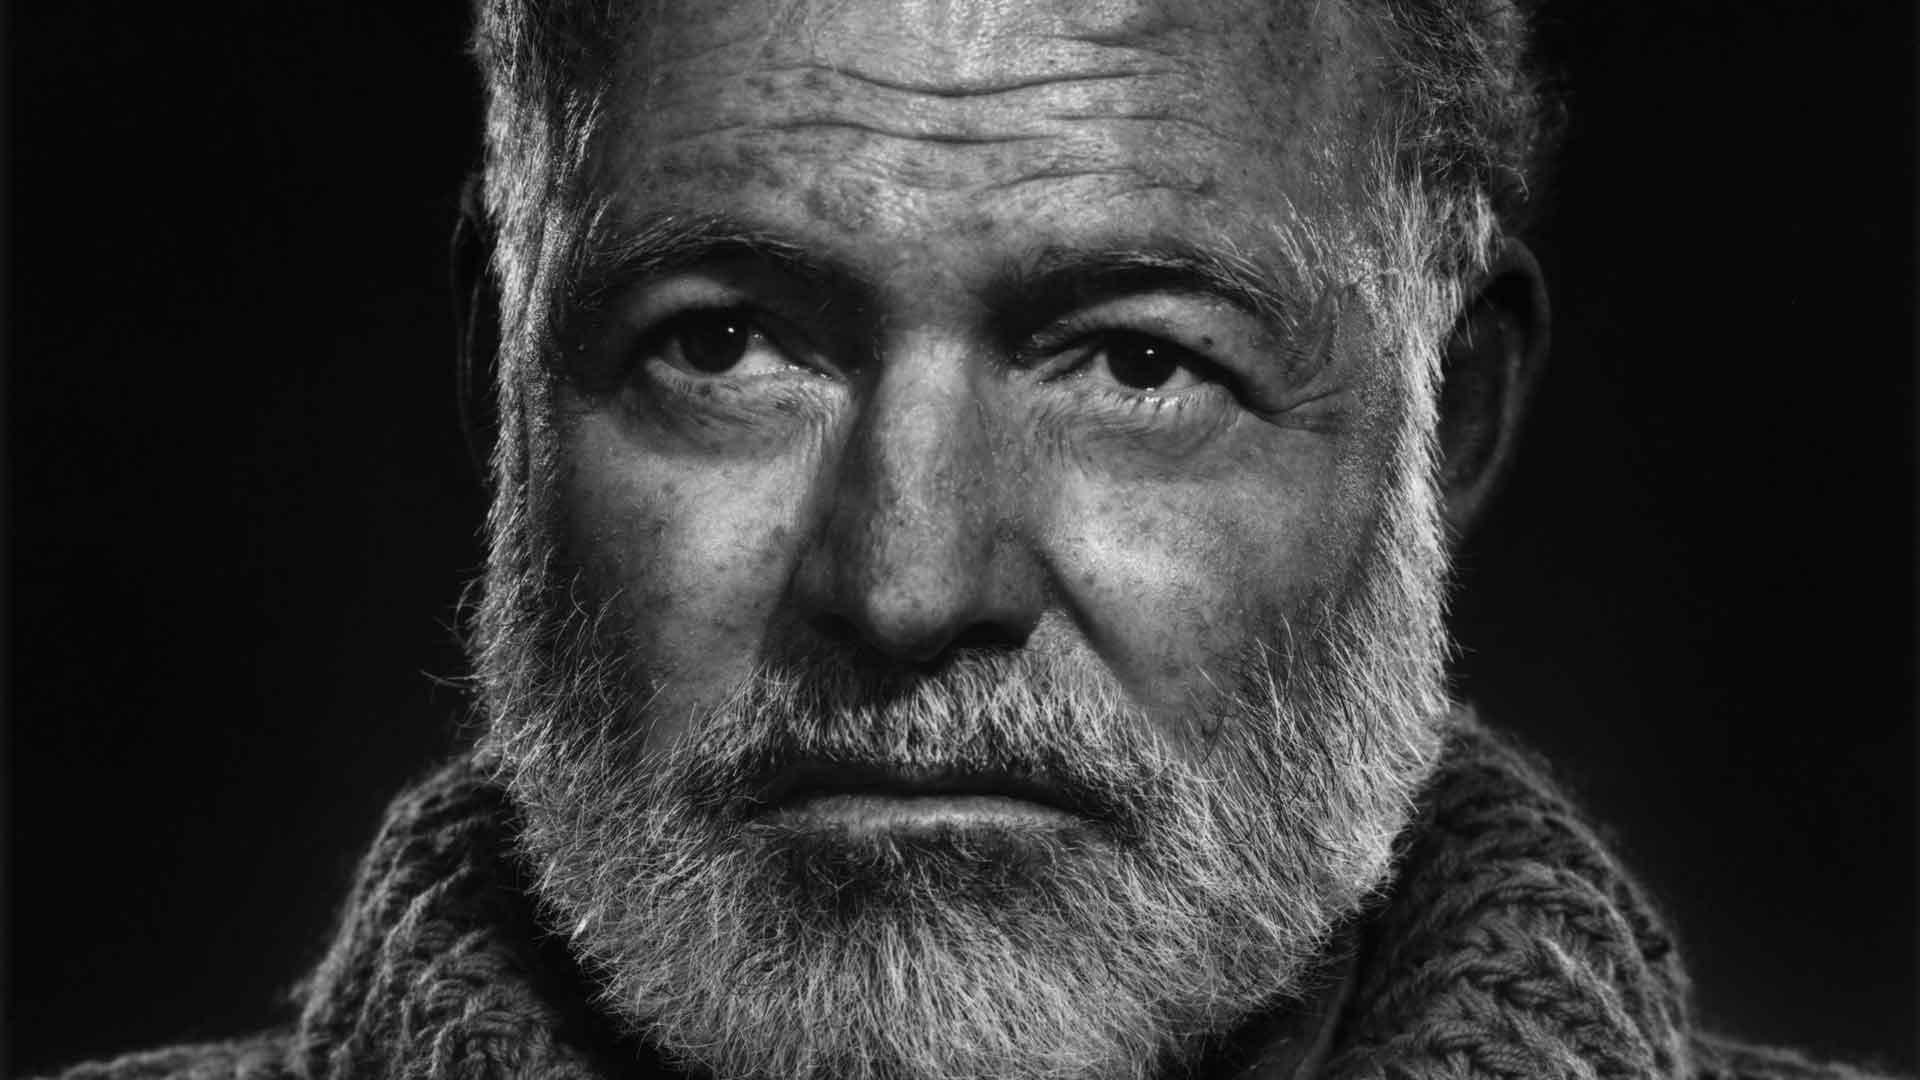 Patrick Hemingway backdrop